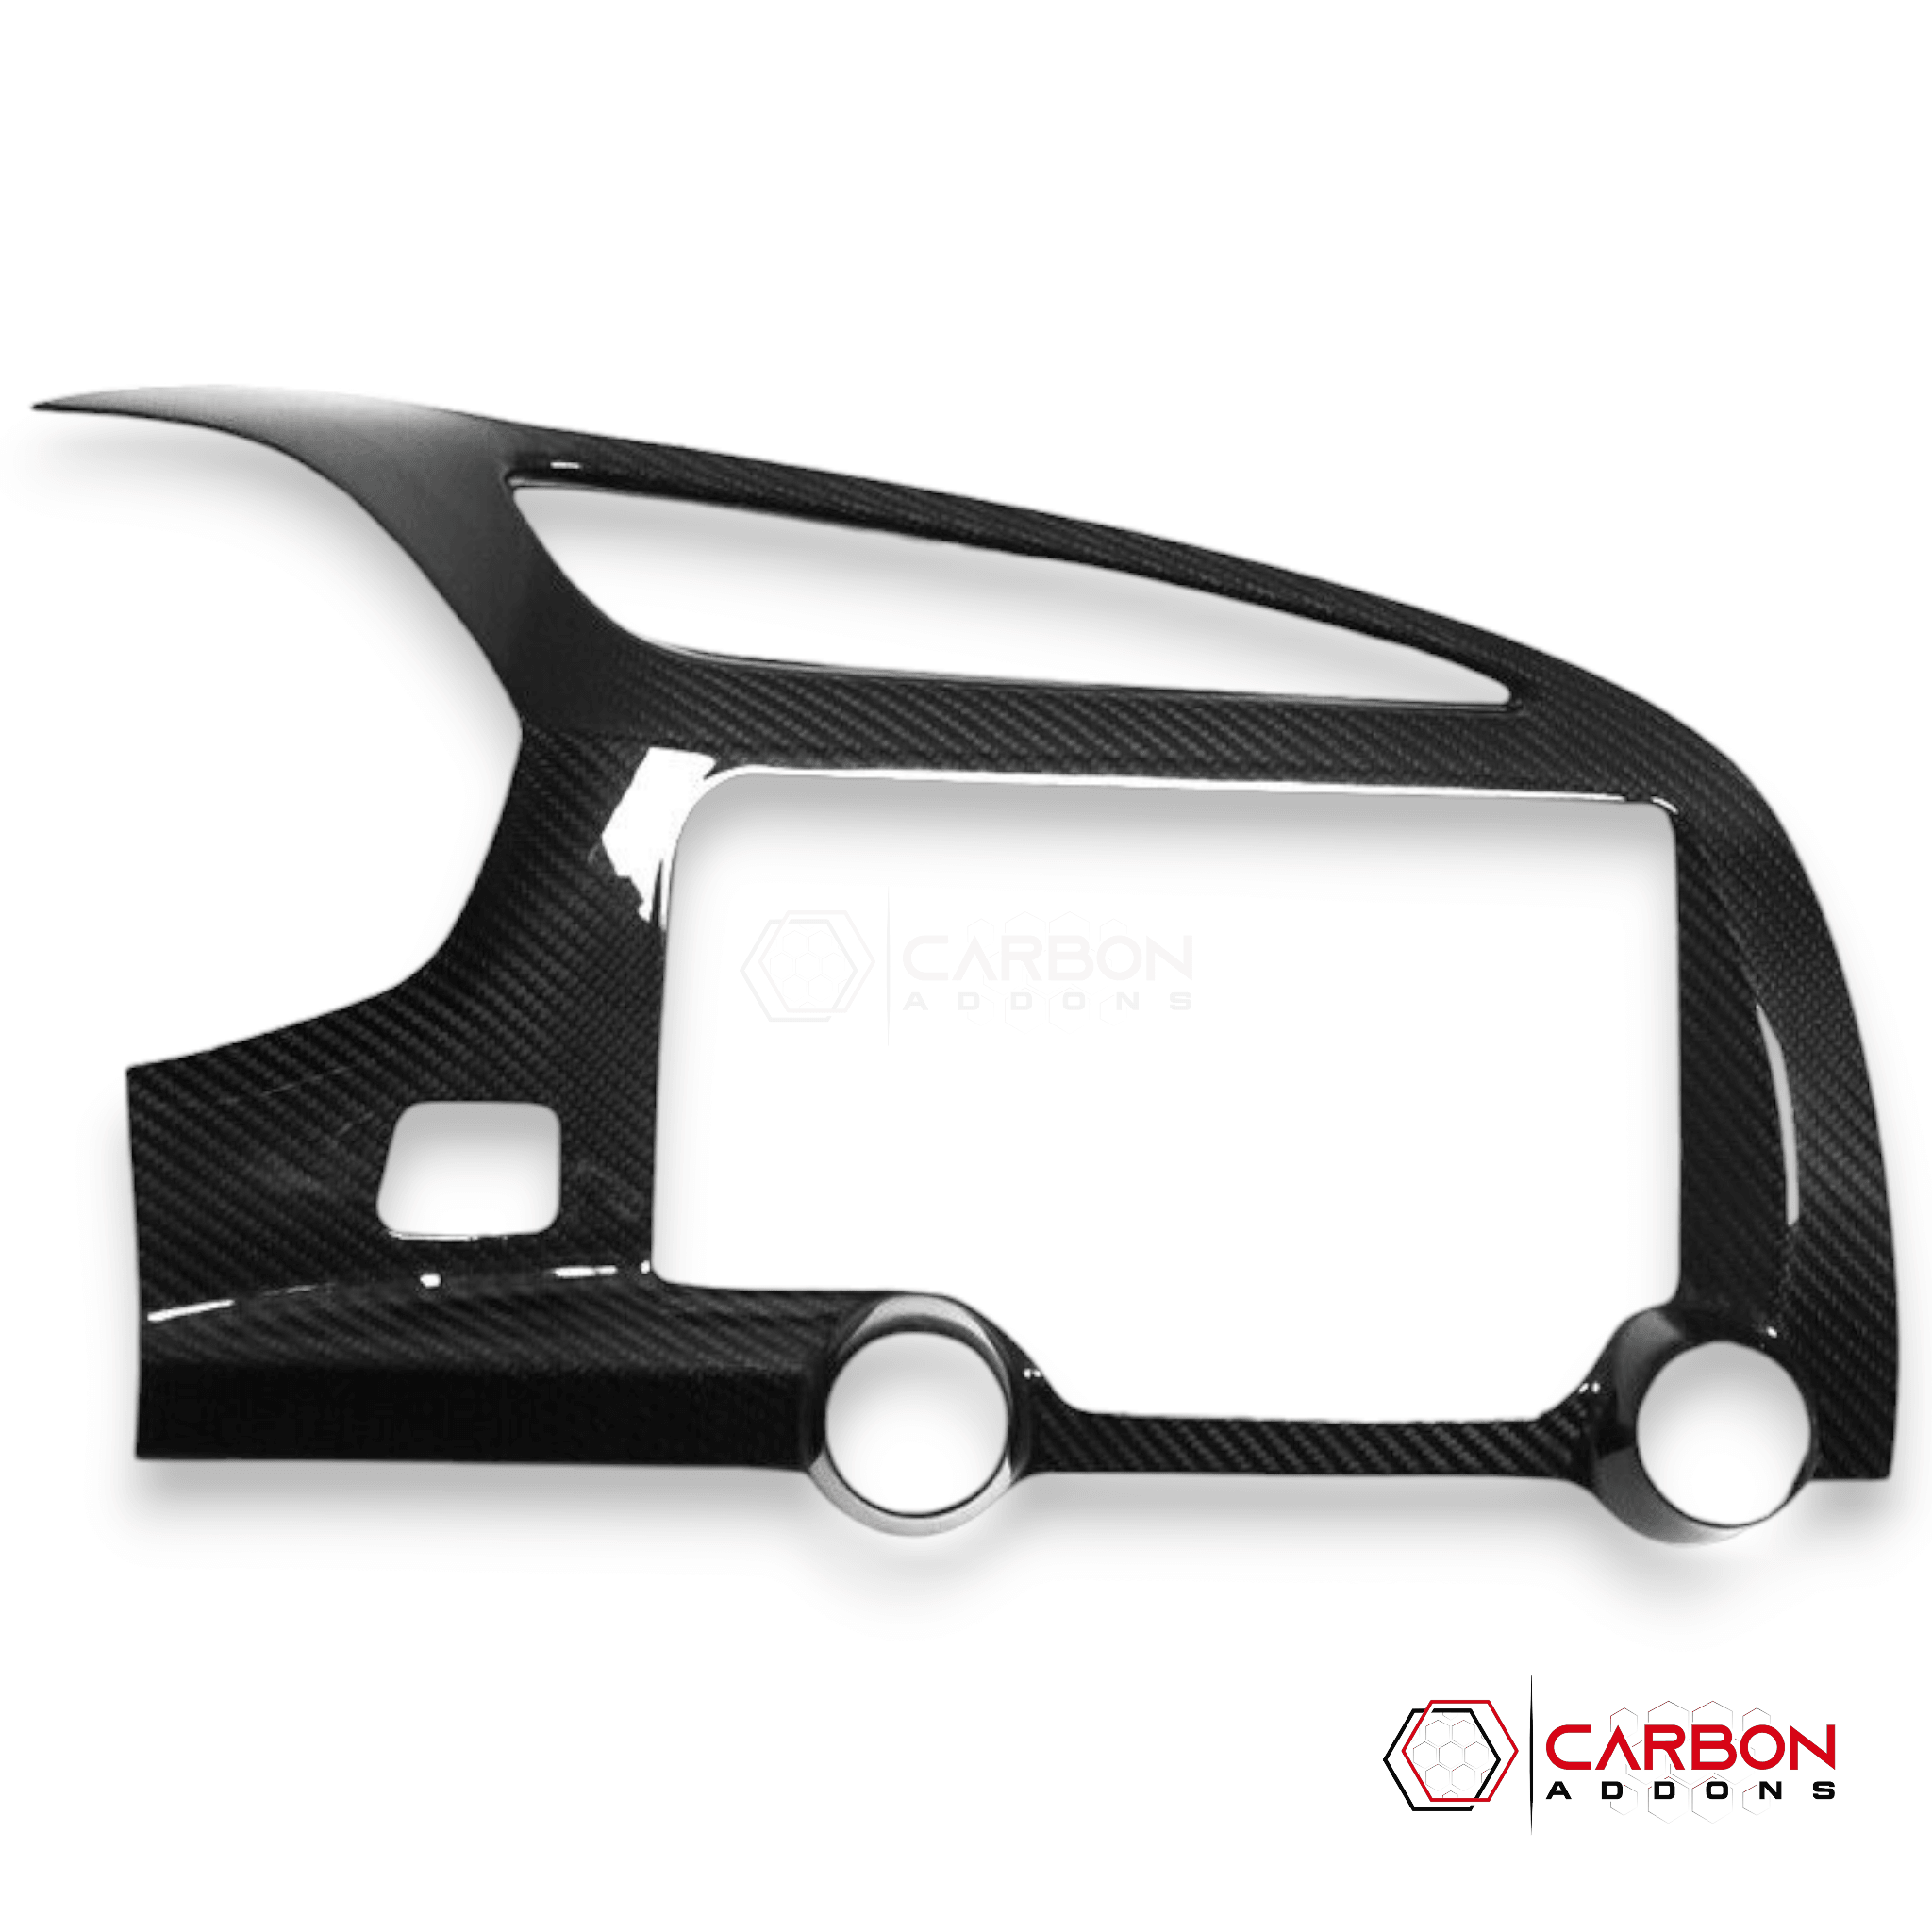 C7 Corvette 2014-2019 Carbon Fiber Multimedia Dash Trim Cover - carbonaddons Carbon Fiber Parts, Accessories, Upgrades, Mods